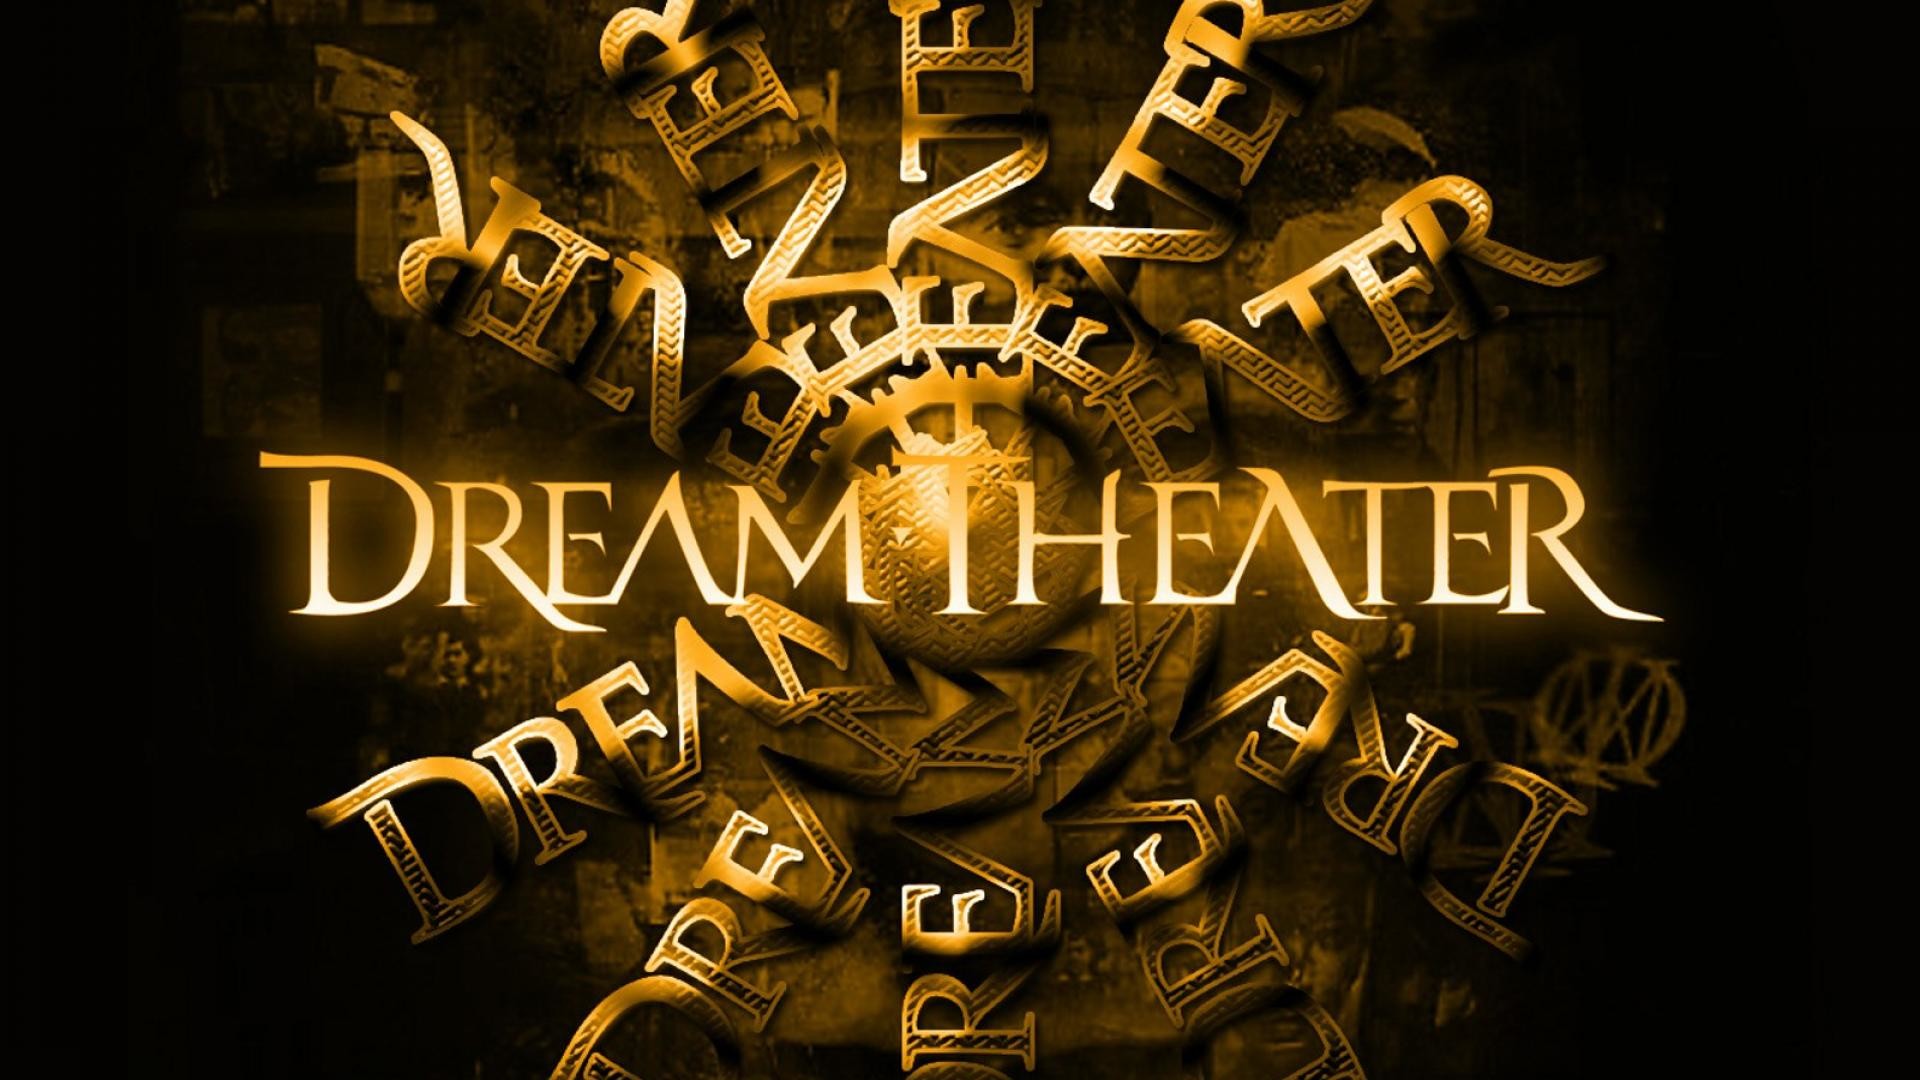 Dream theater hd wallpaper – – HQ Desktop Wallpapers